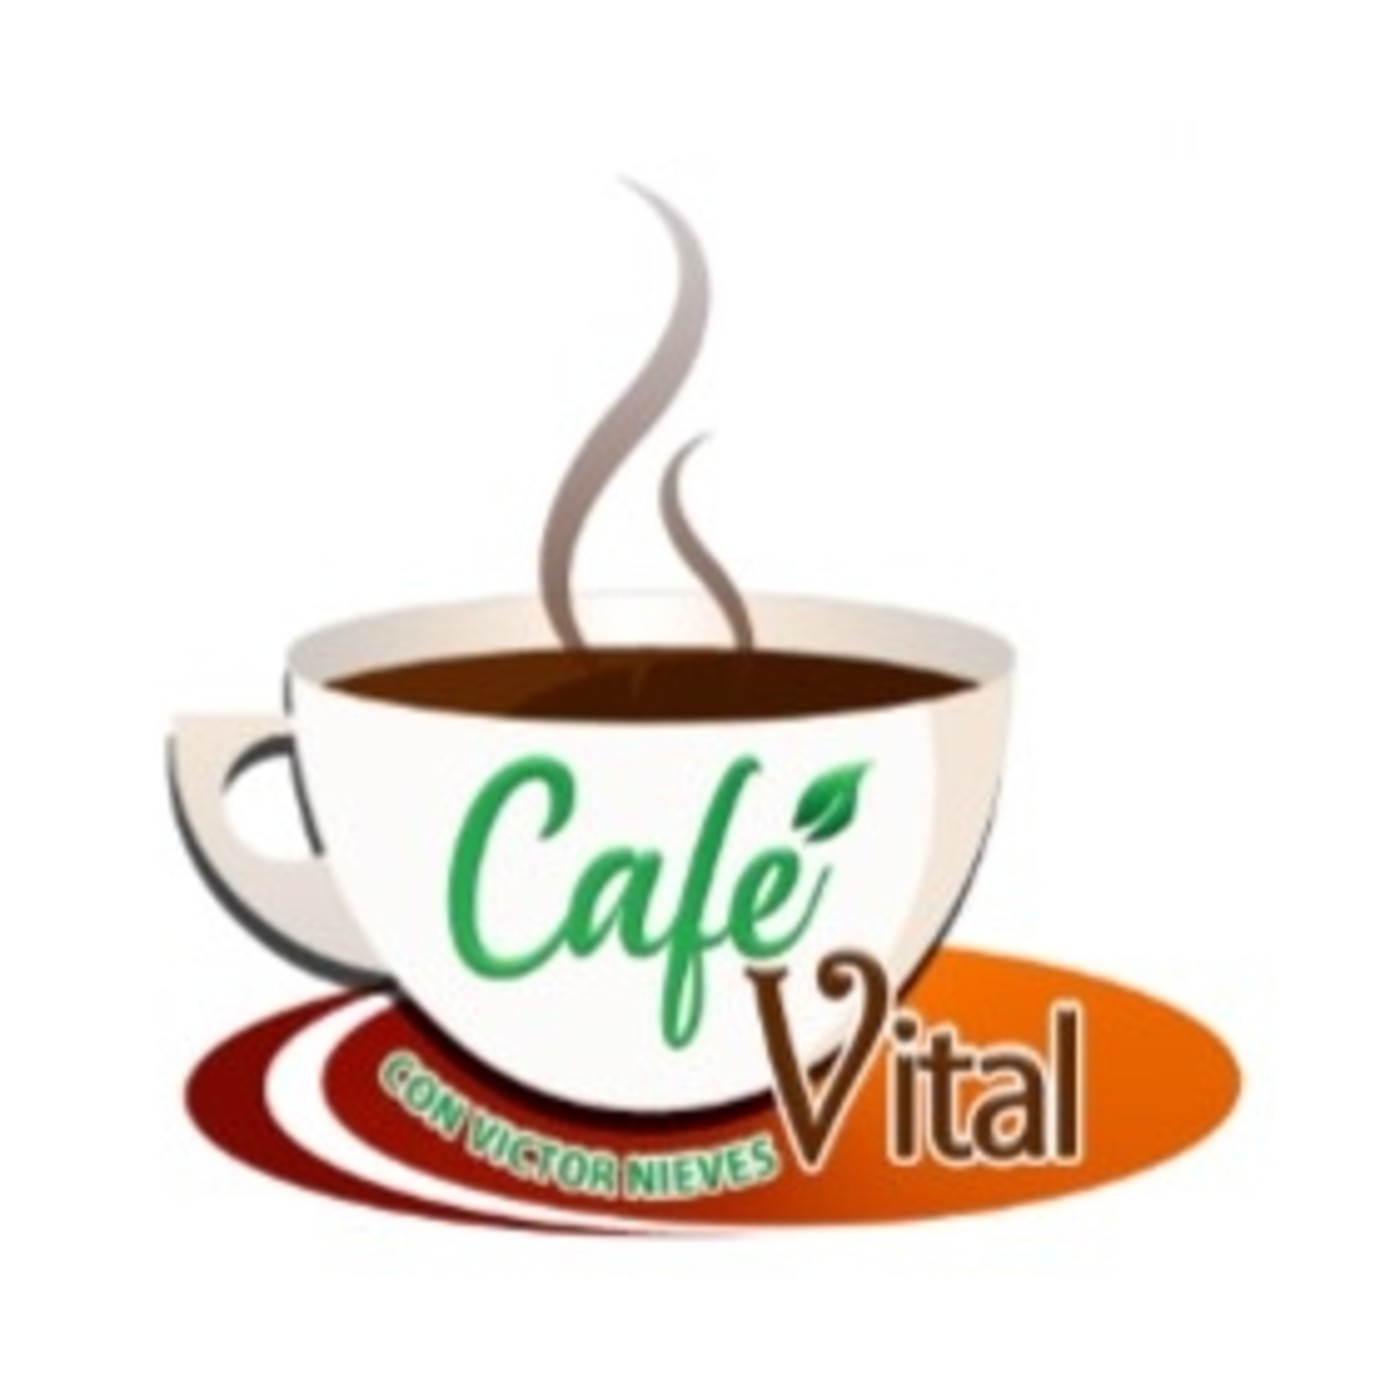 Cafe vital 01 03 2021